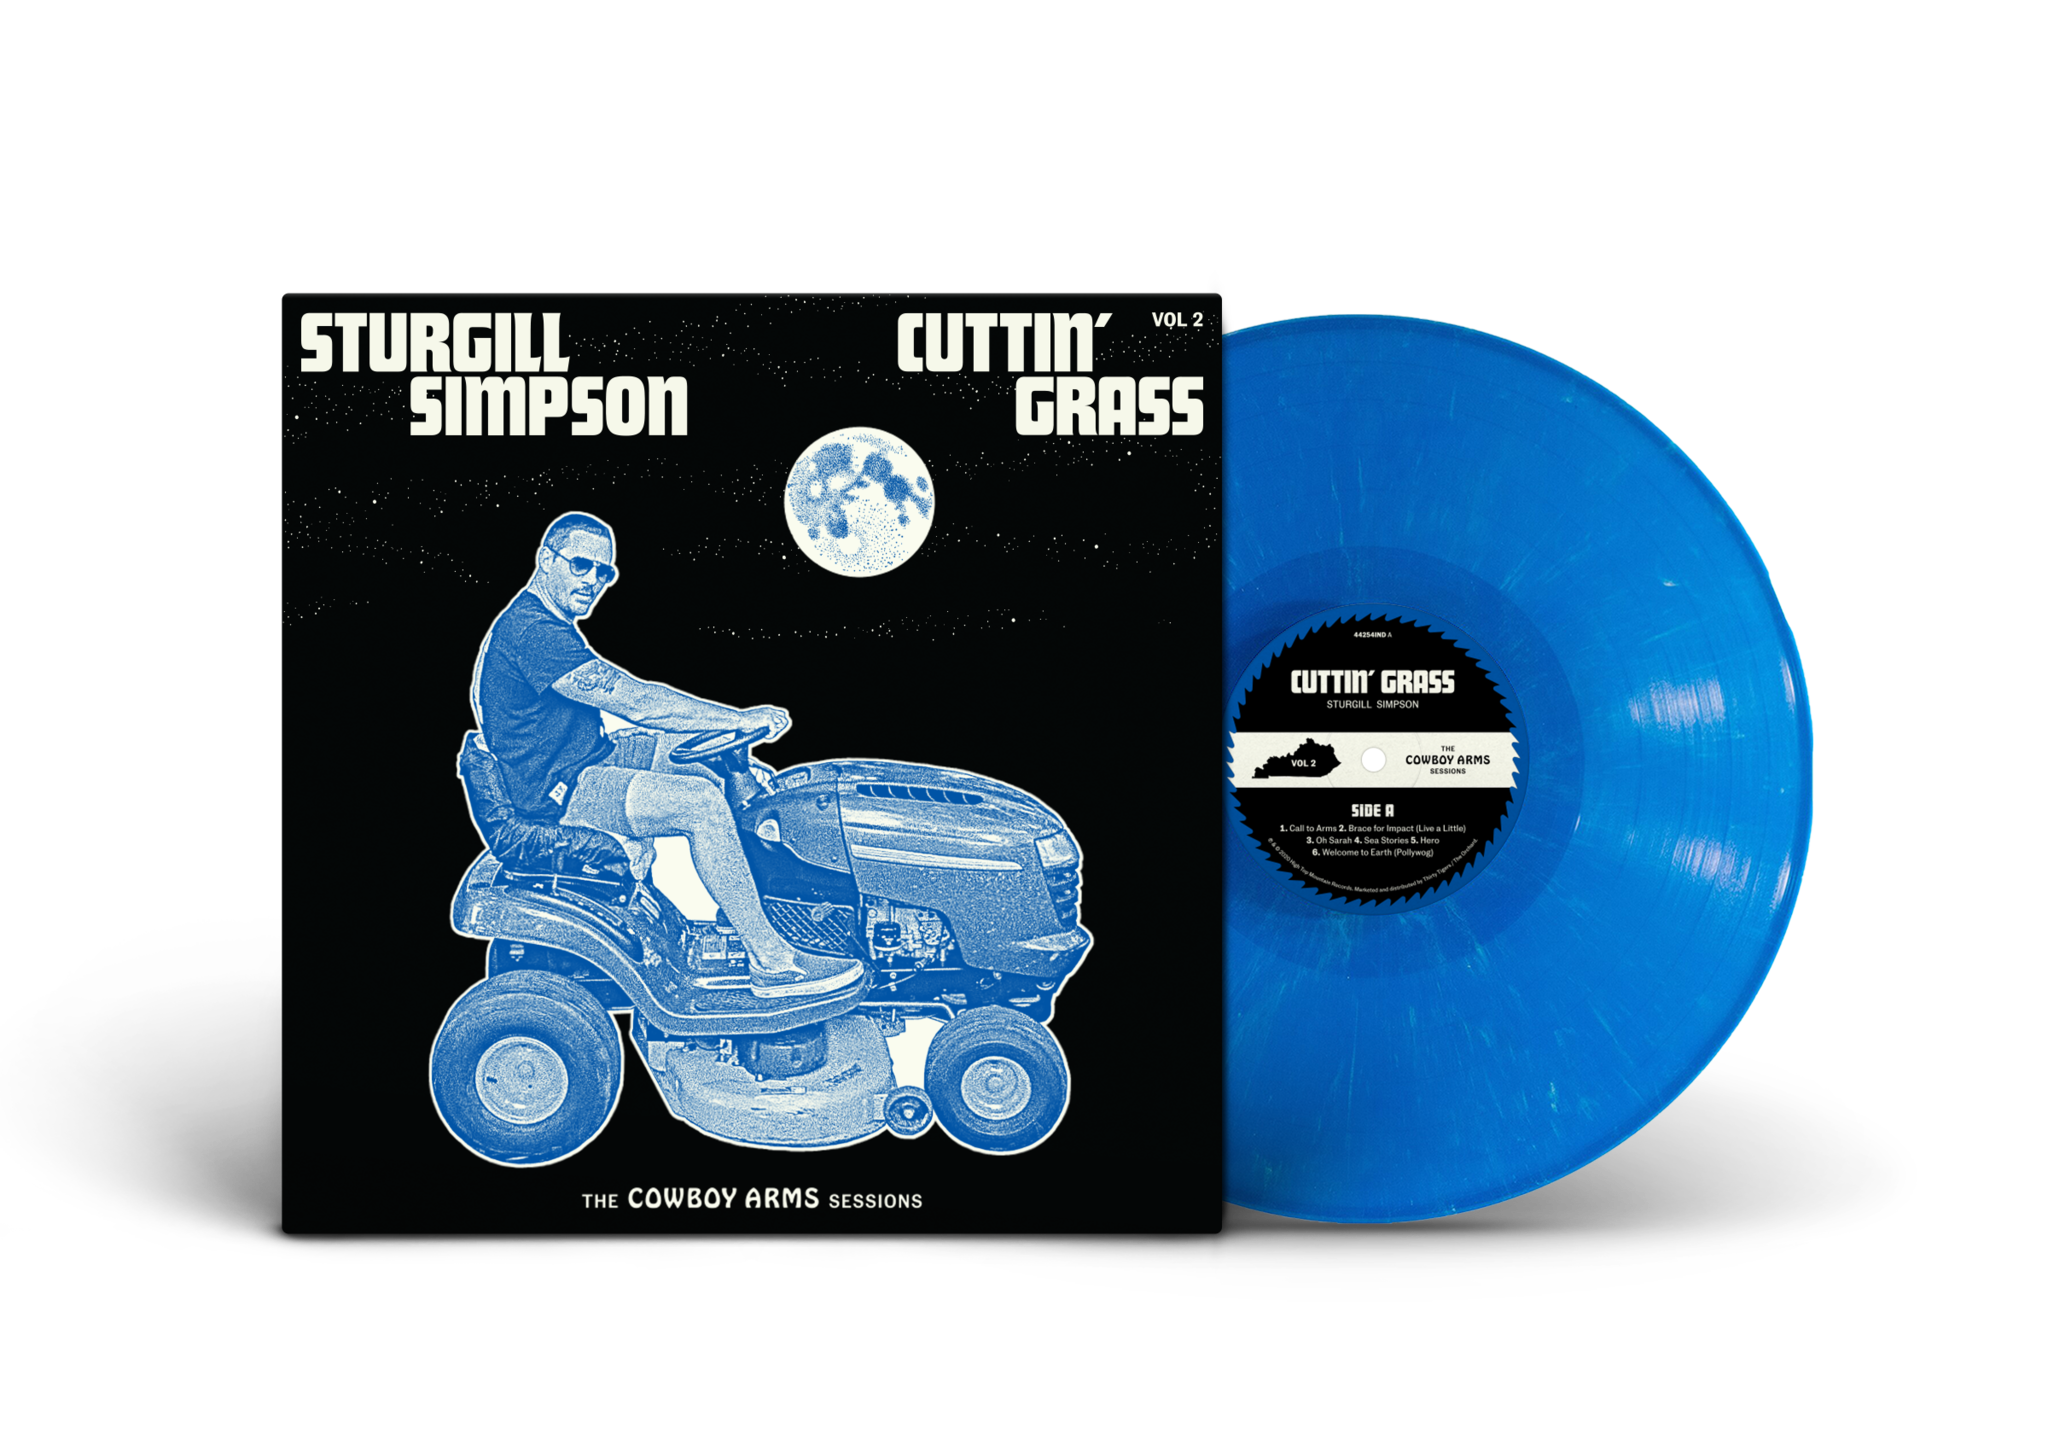 Sturgill Simpson | Cuttin' Grass Vol. 2 (Cowboy Arms Sessions) | Indie Exclusive | Blue w/White Swirl Vinyl) | Vinyl